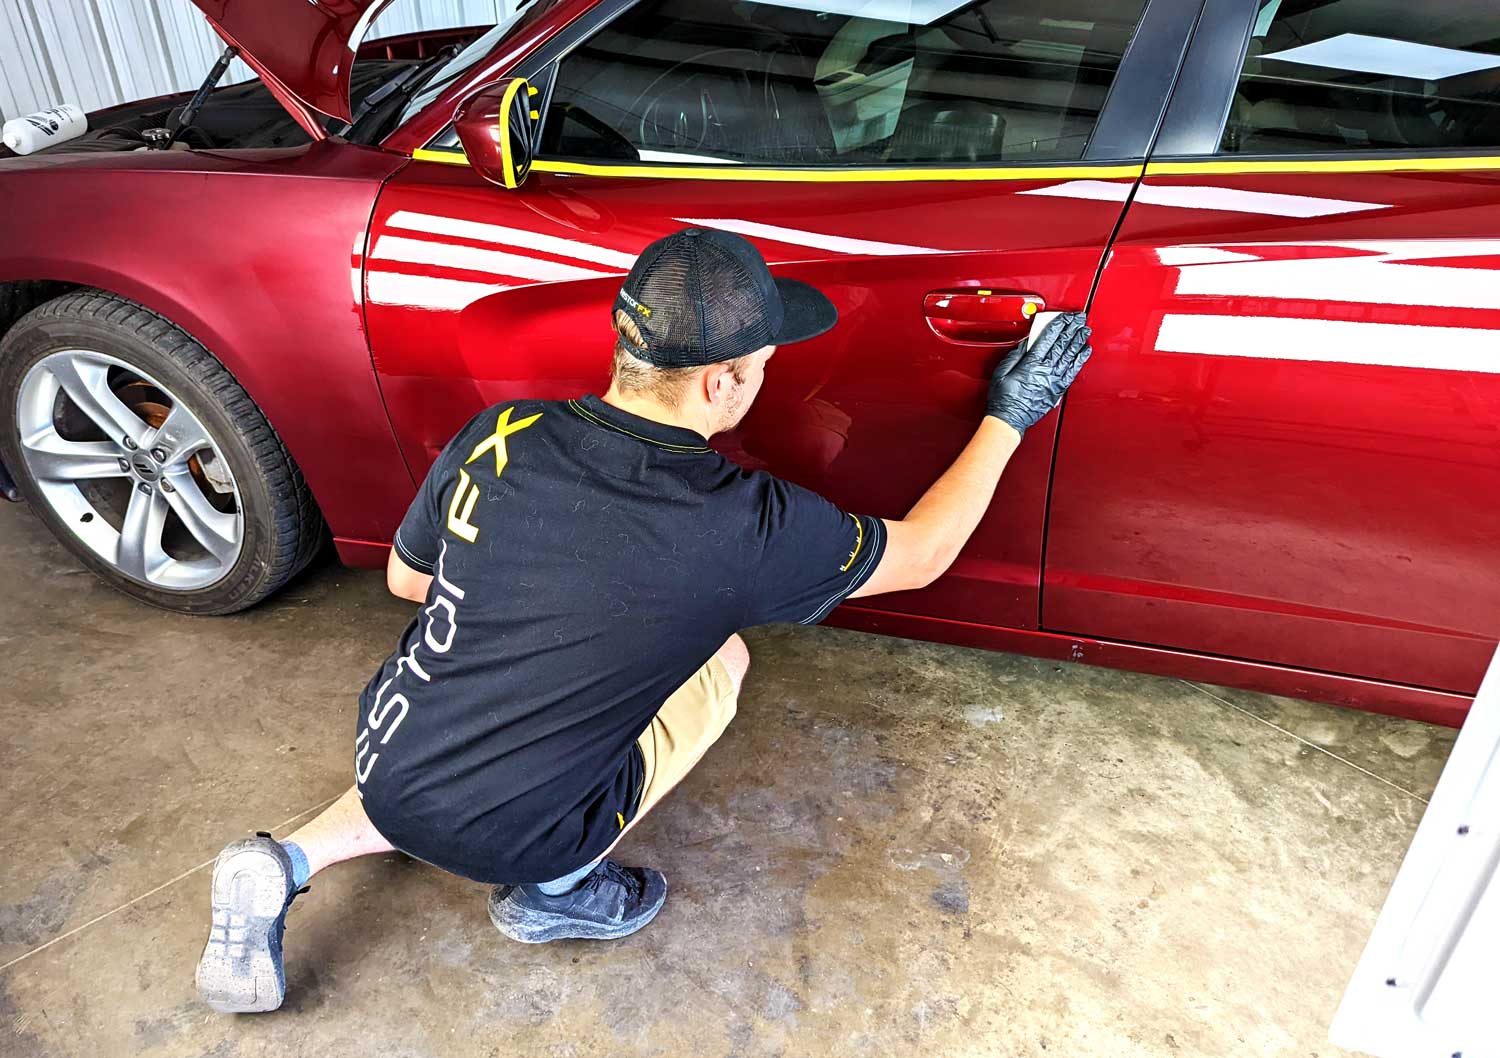 RestorFX technician applies restorative product onto red vehicle's brightly lit shiny door